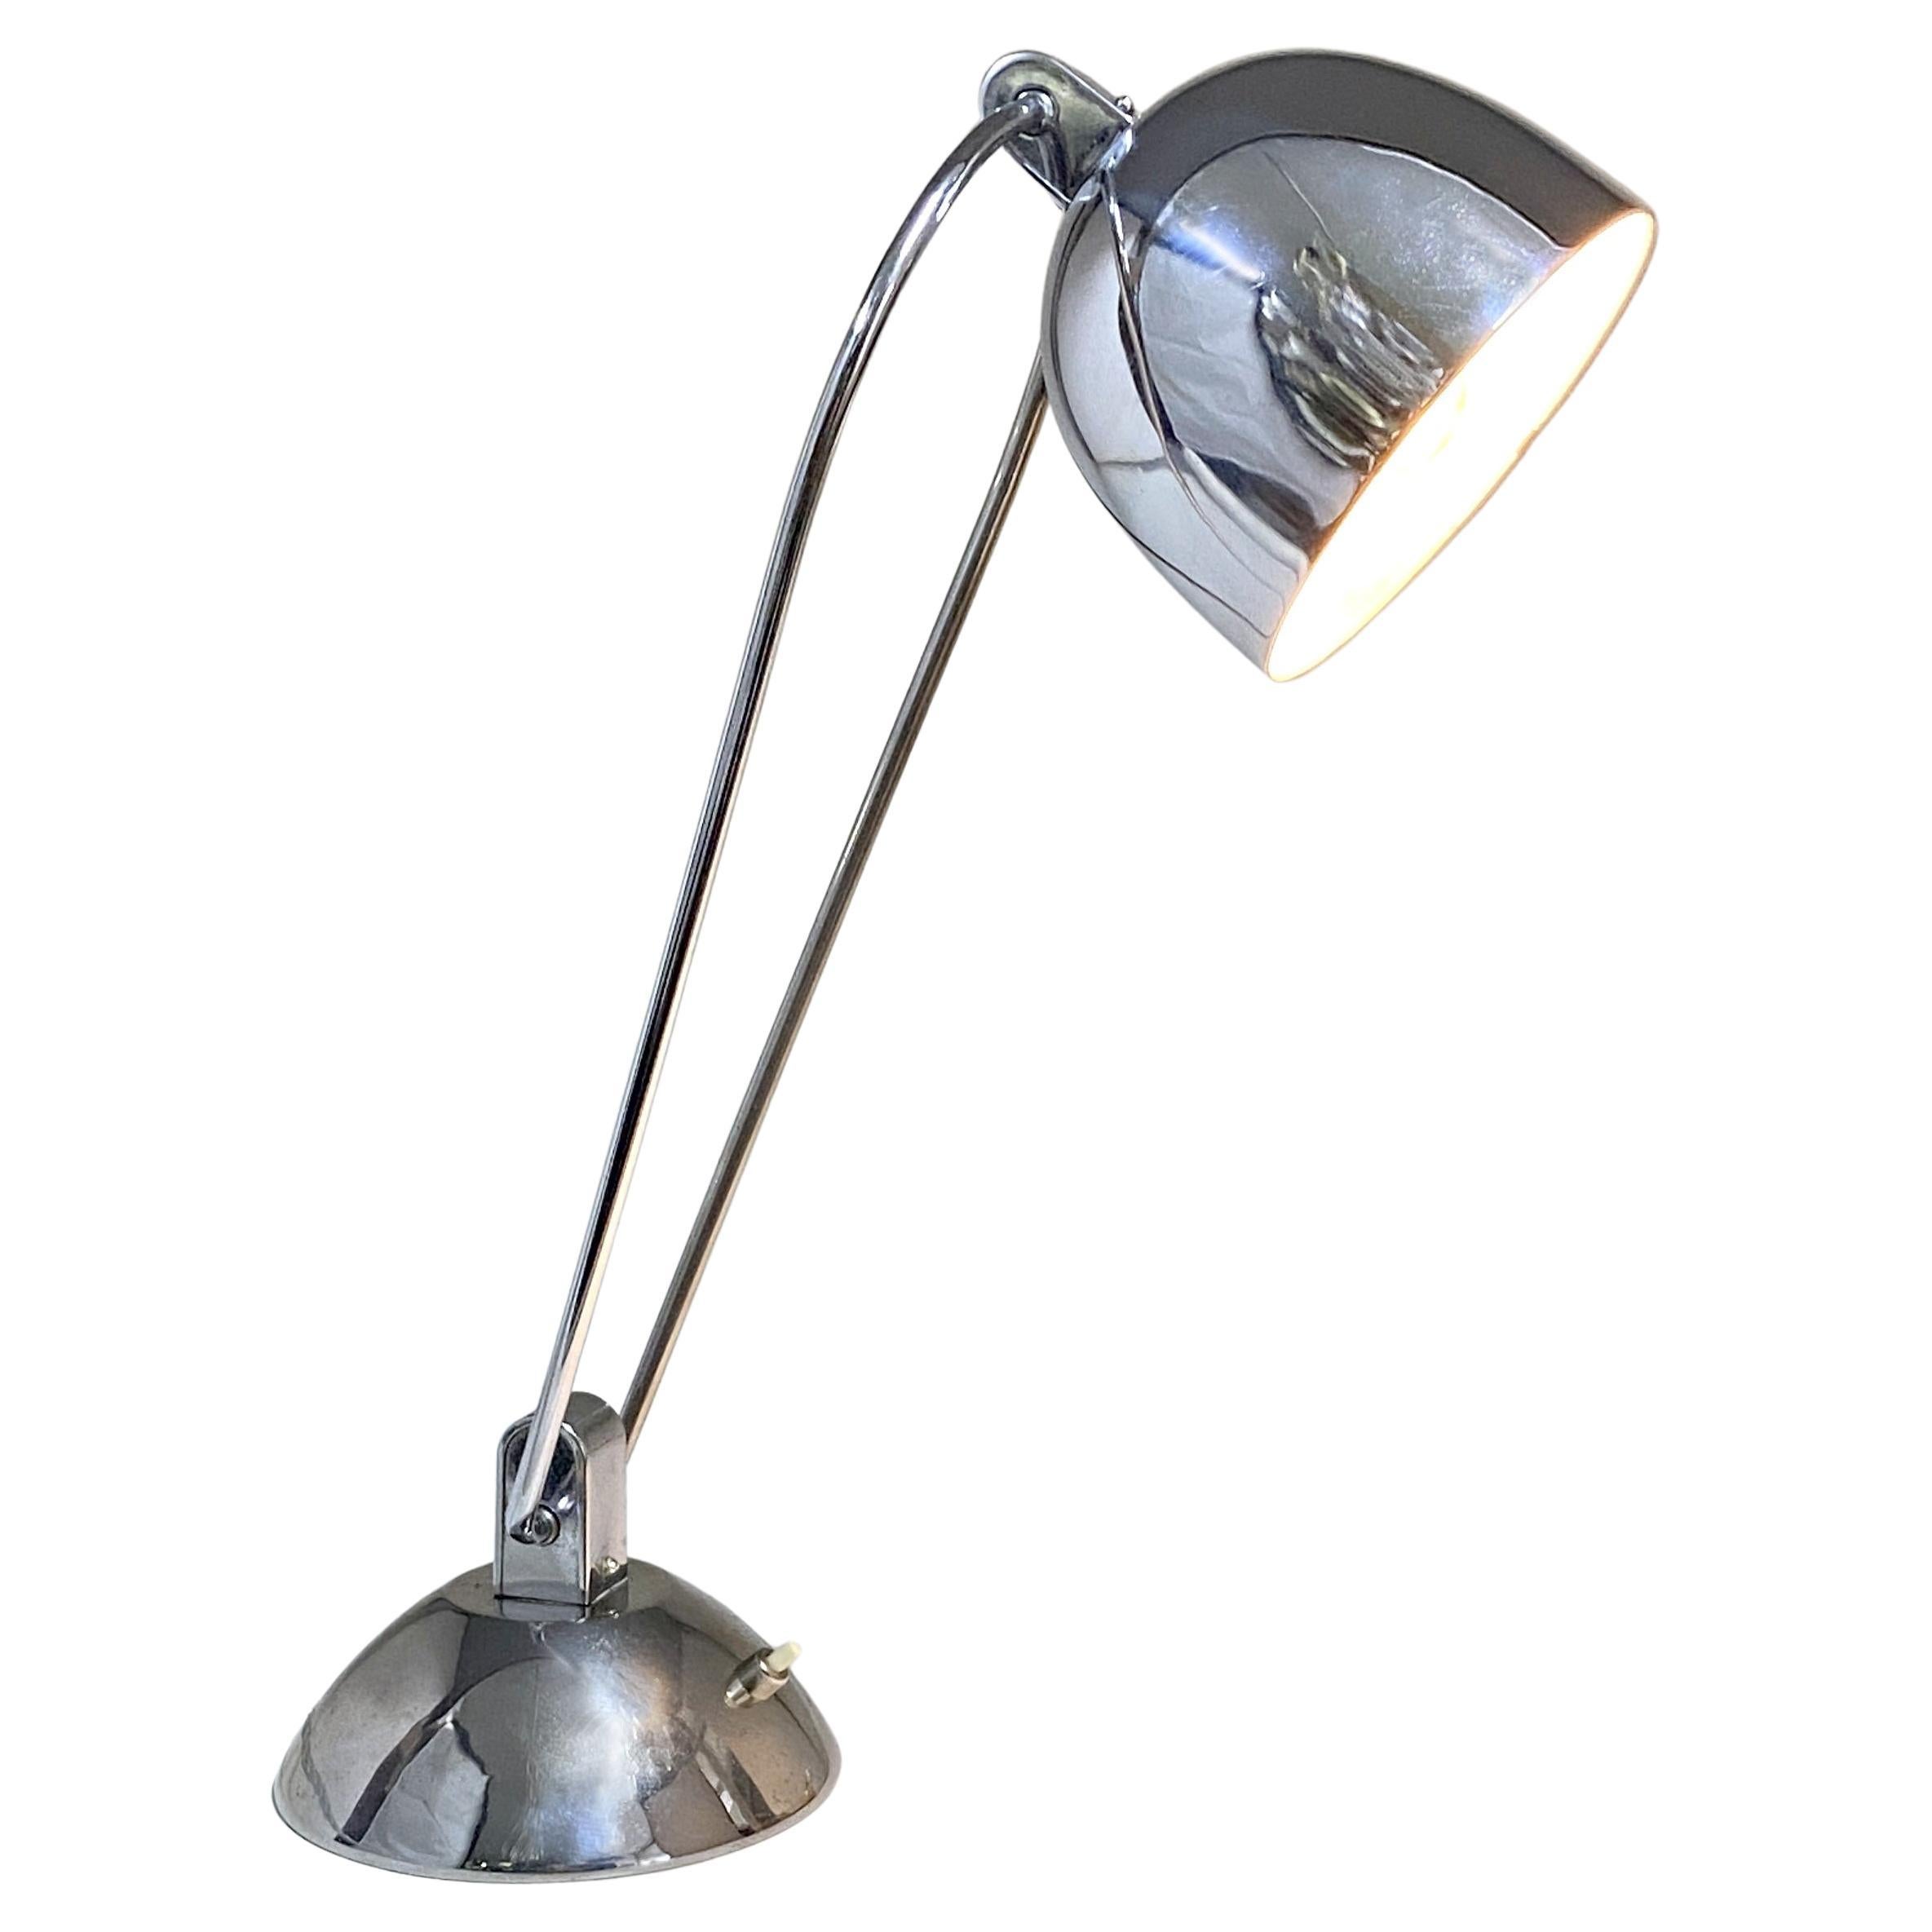  Modernist Desk Lamp Jumo designed by Yves Jujeau and André Mounique For Sale